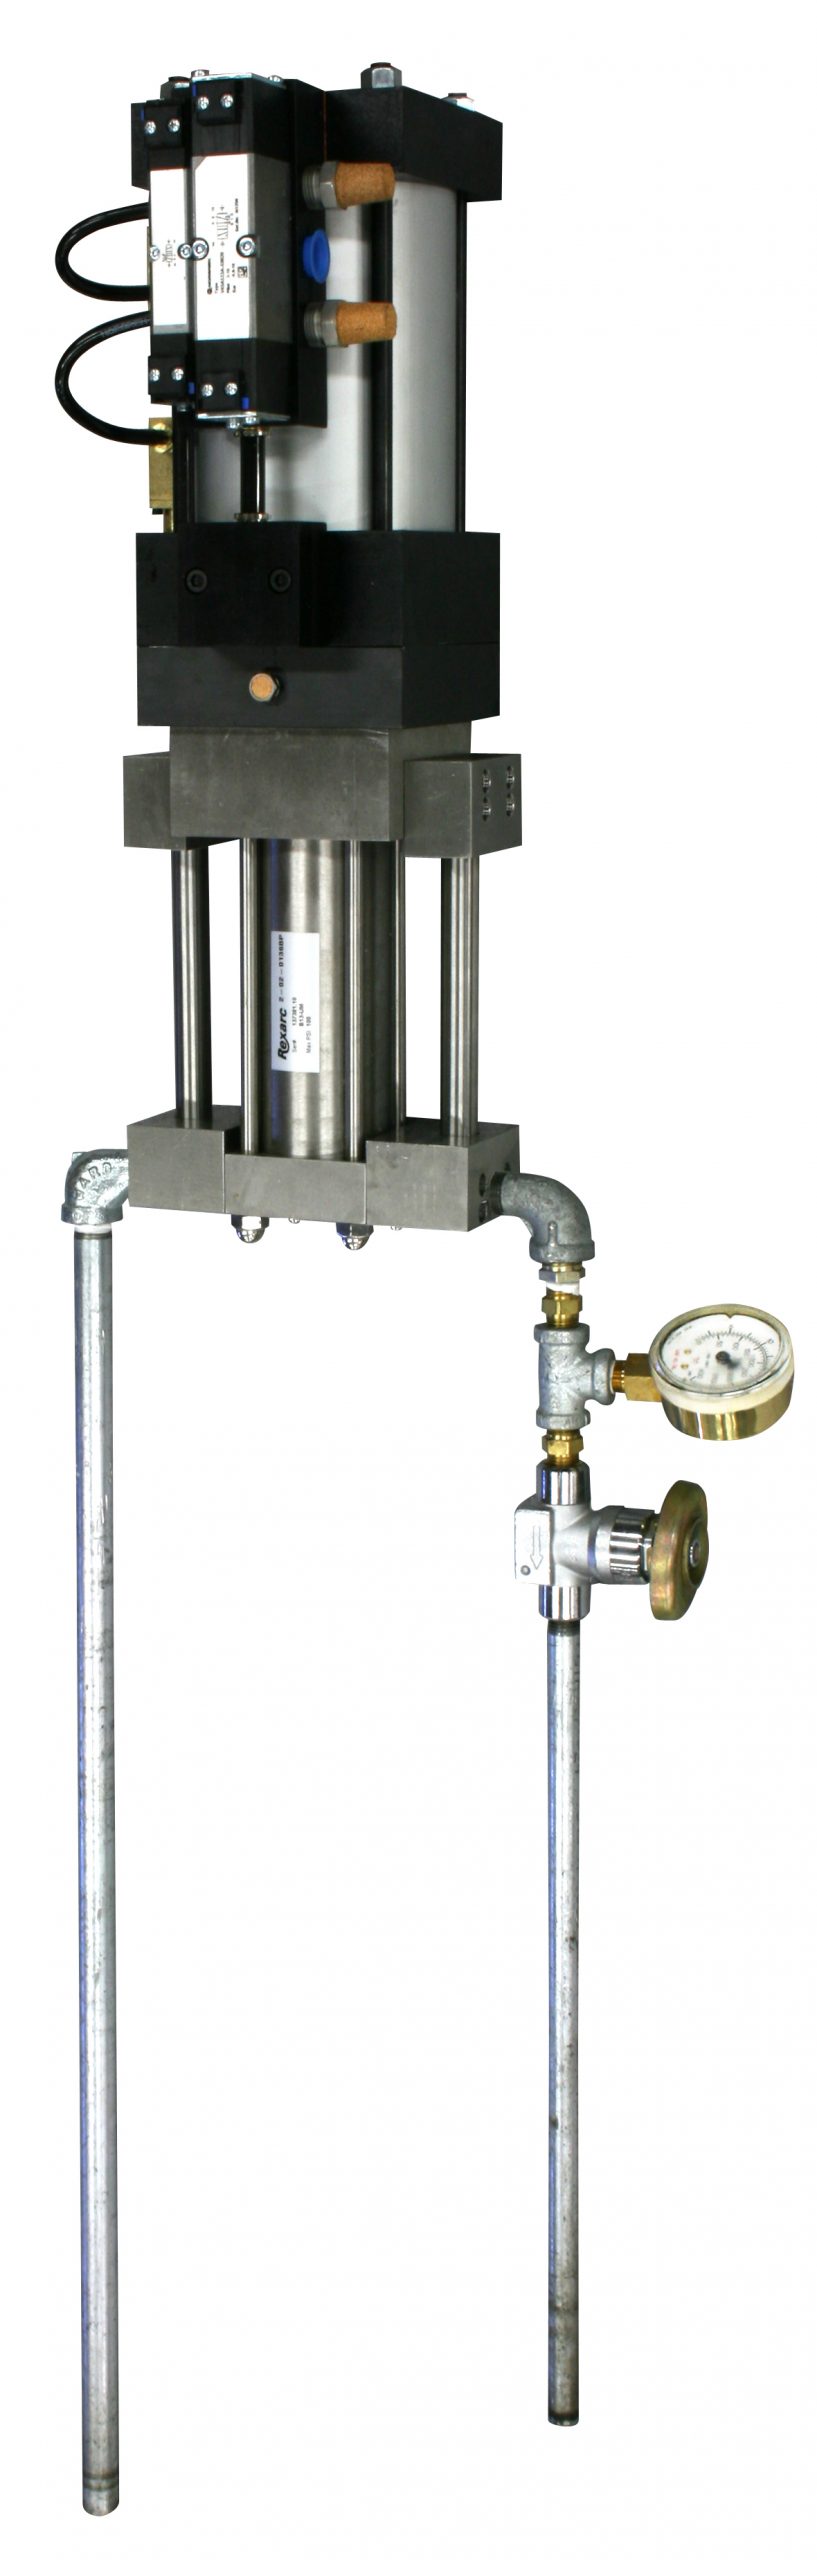 Acetylene Plant | Acetylene Process Equipment | Acetone Pump for Acetylene Cylinders